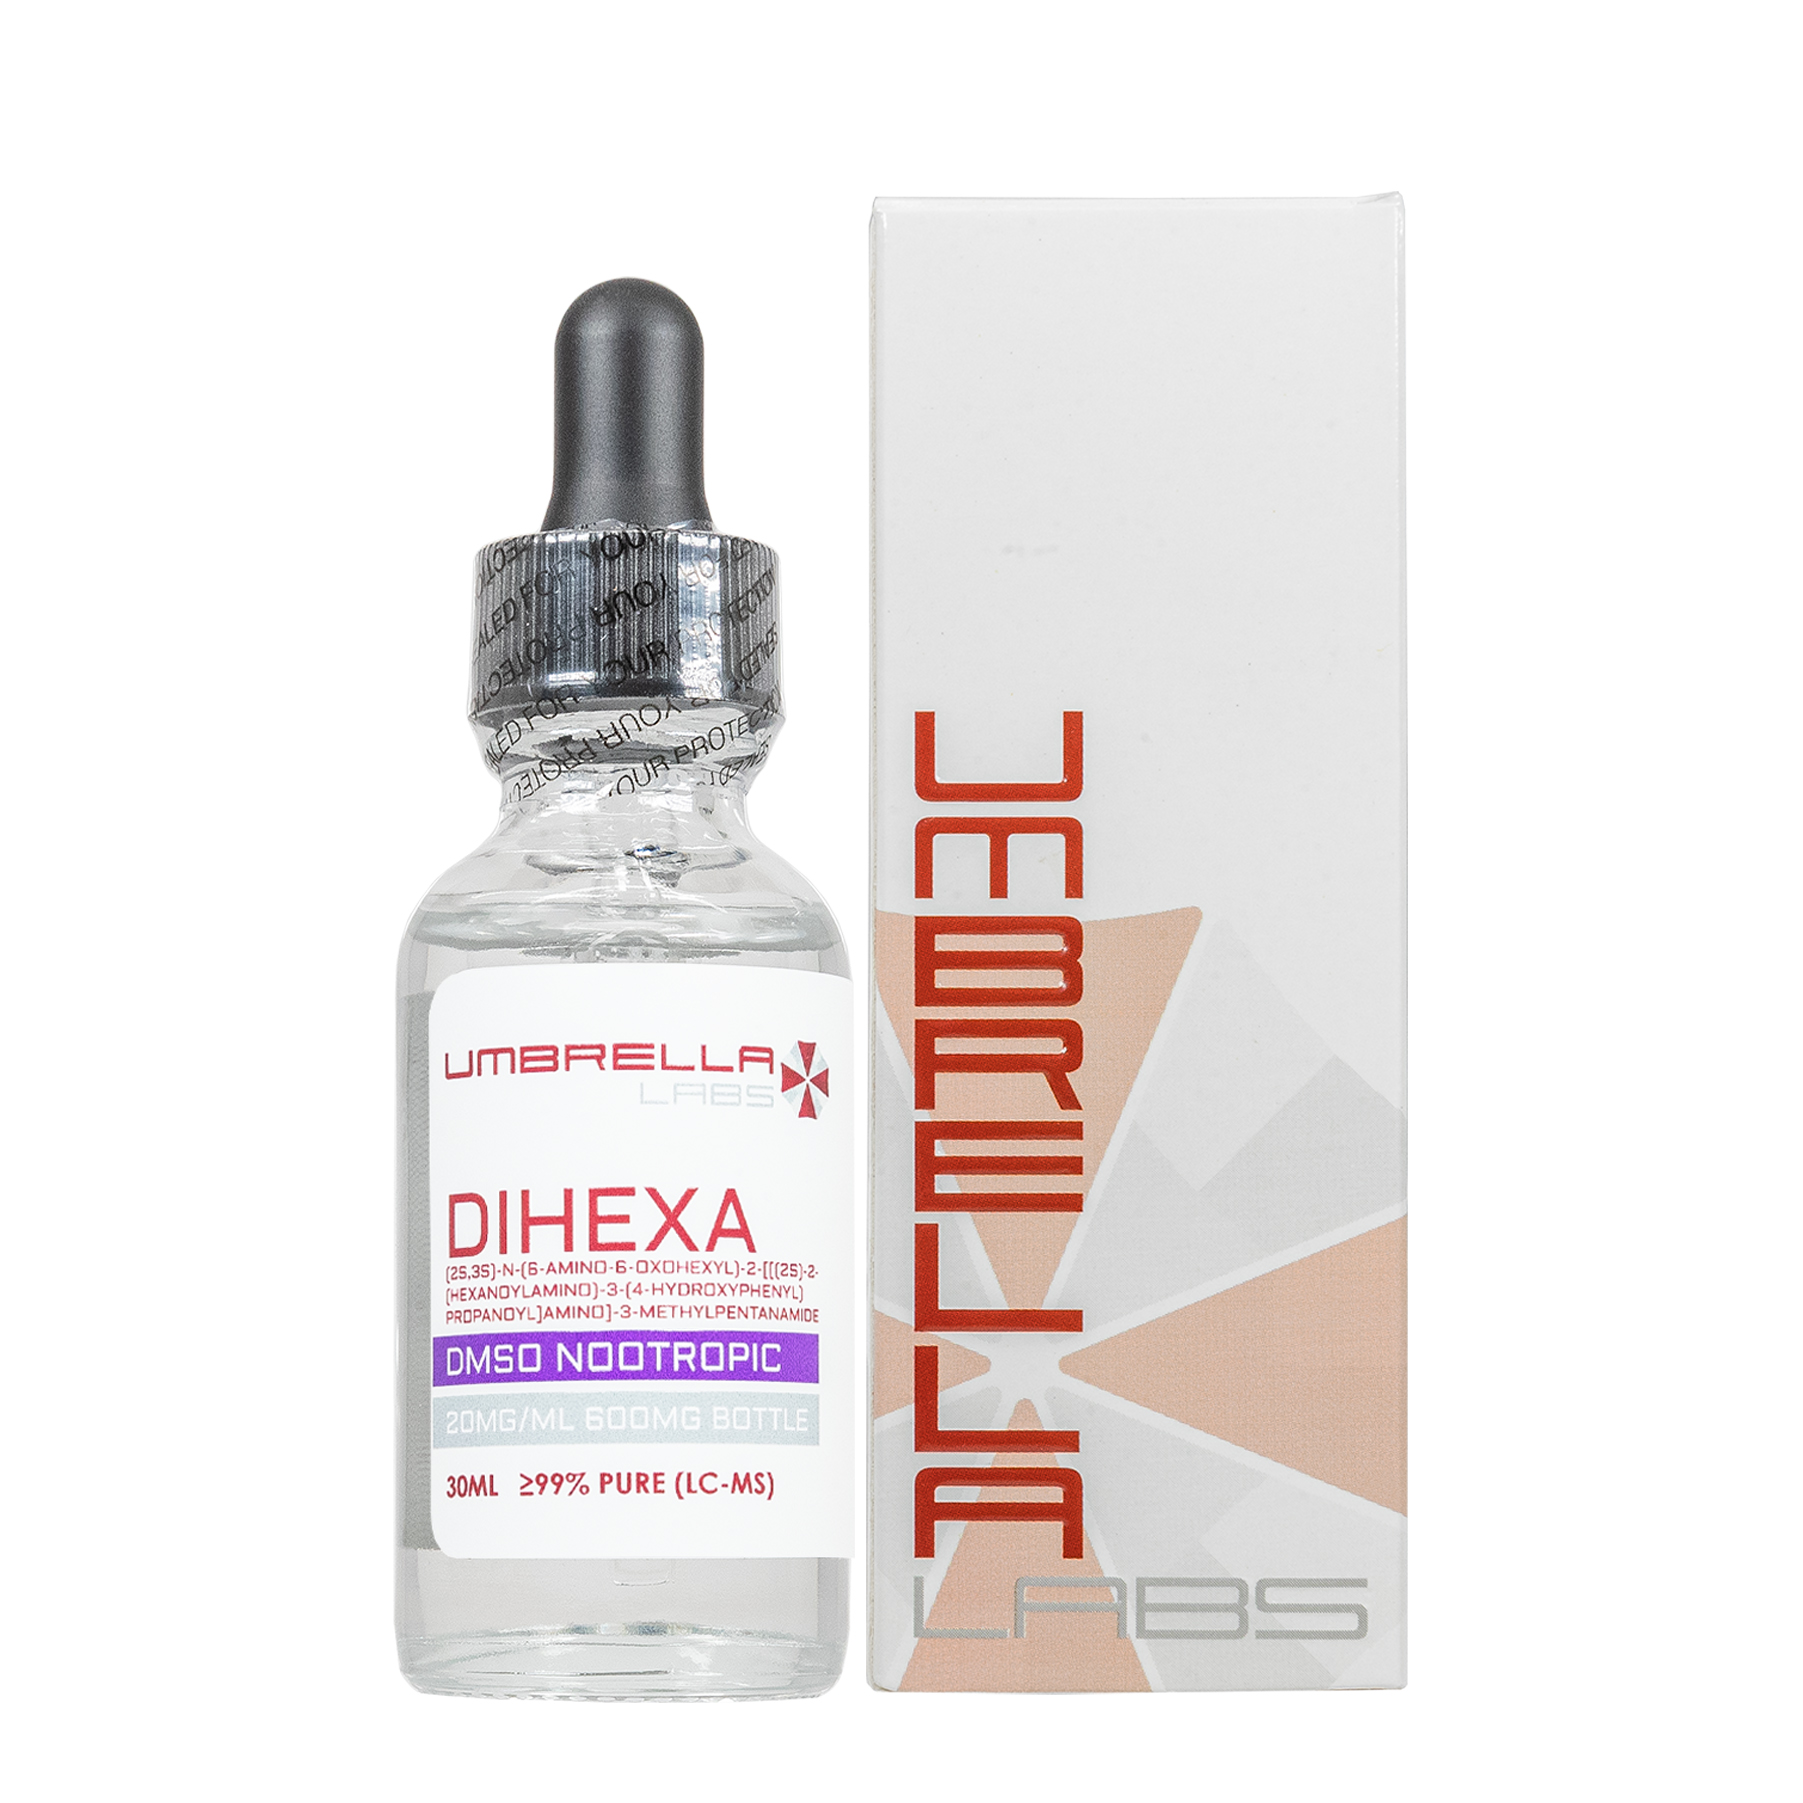 dihexa 30ml liquid (20mg/ml, 600mg bottle)